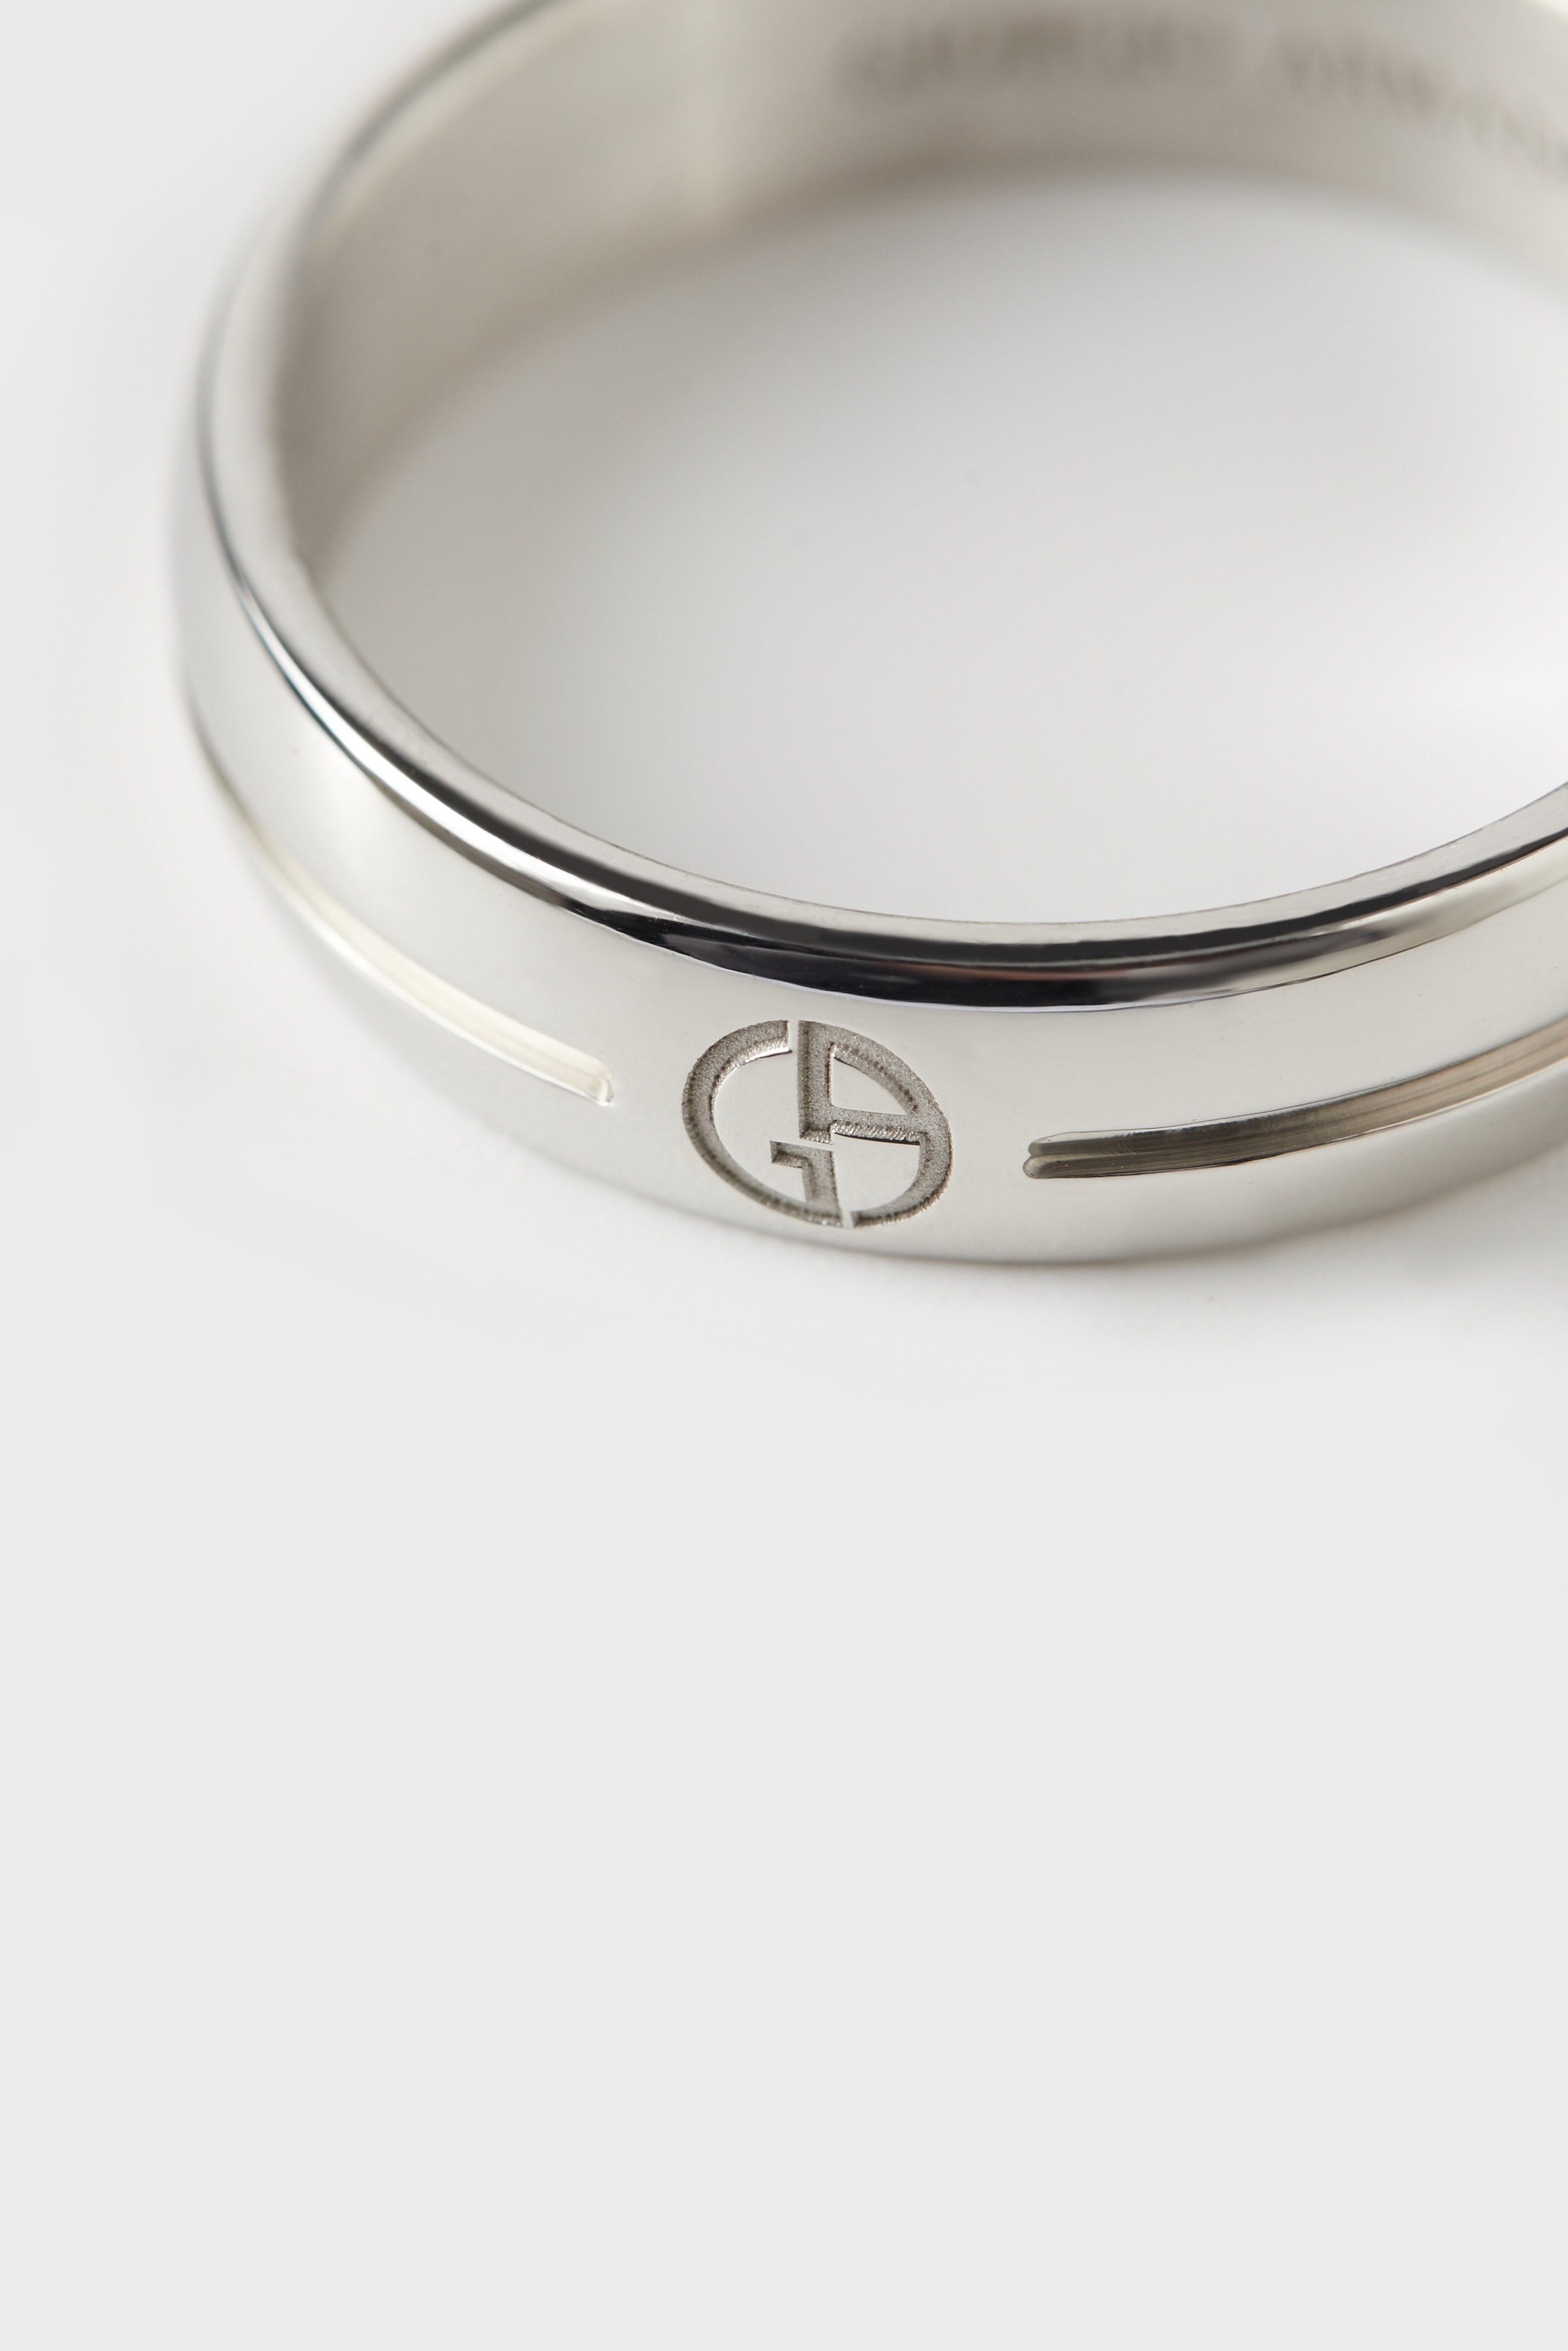 Giorgio Armani 男士银质镌刻LOGO简约素色戒指